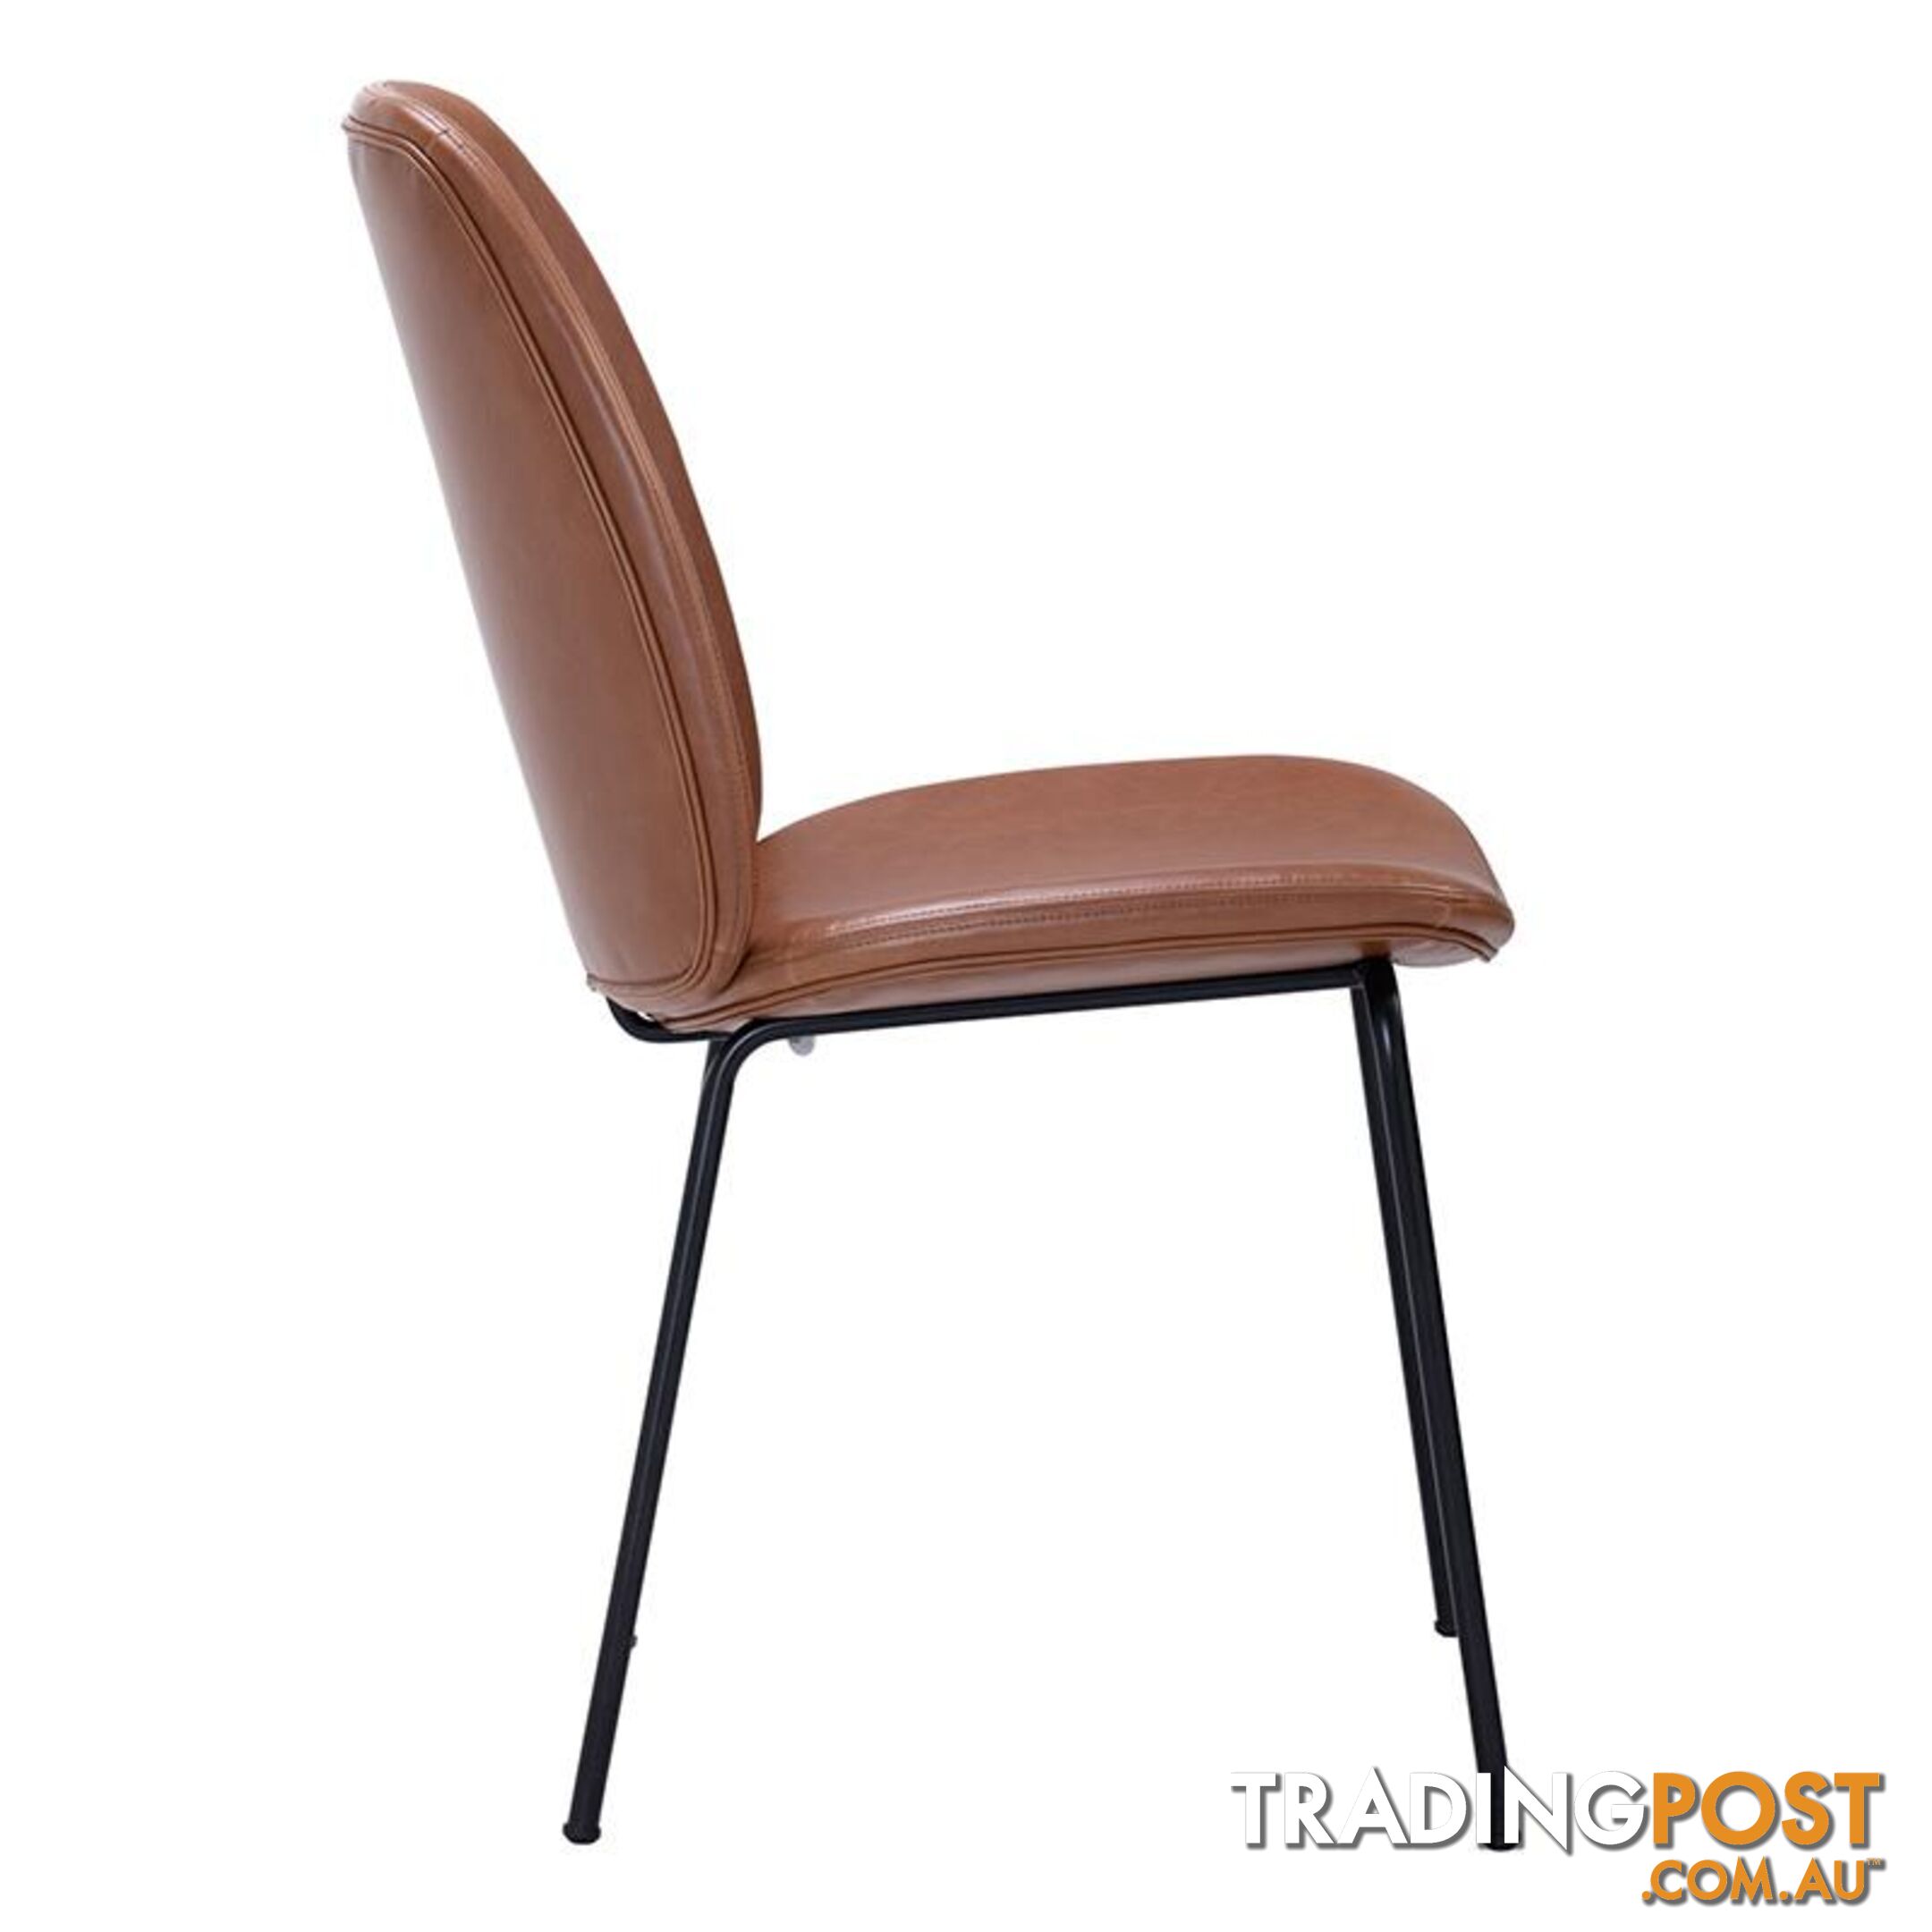 ADELIA Dining Chair - Tan & Black - 241220 - 5705994981704